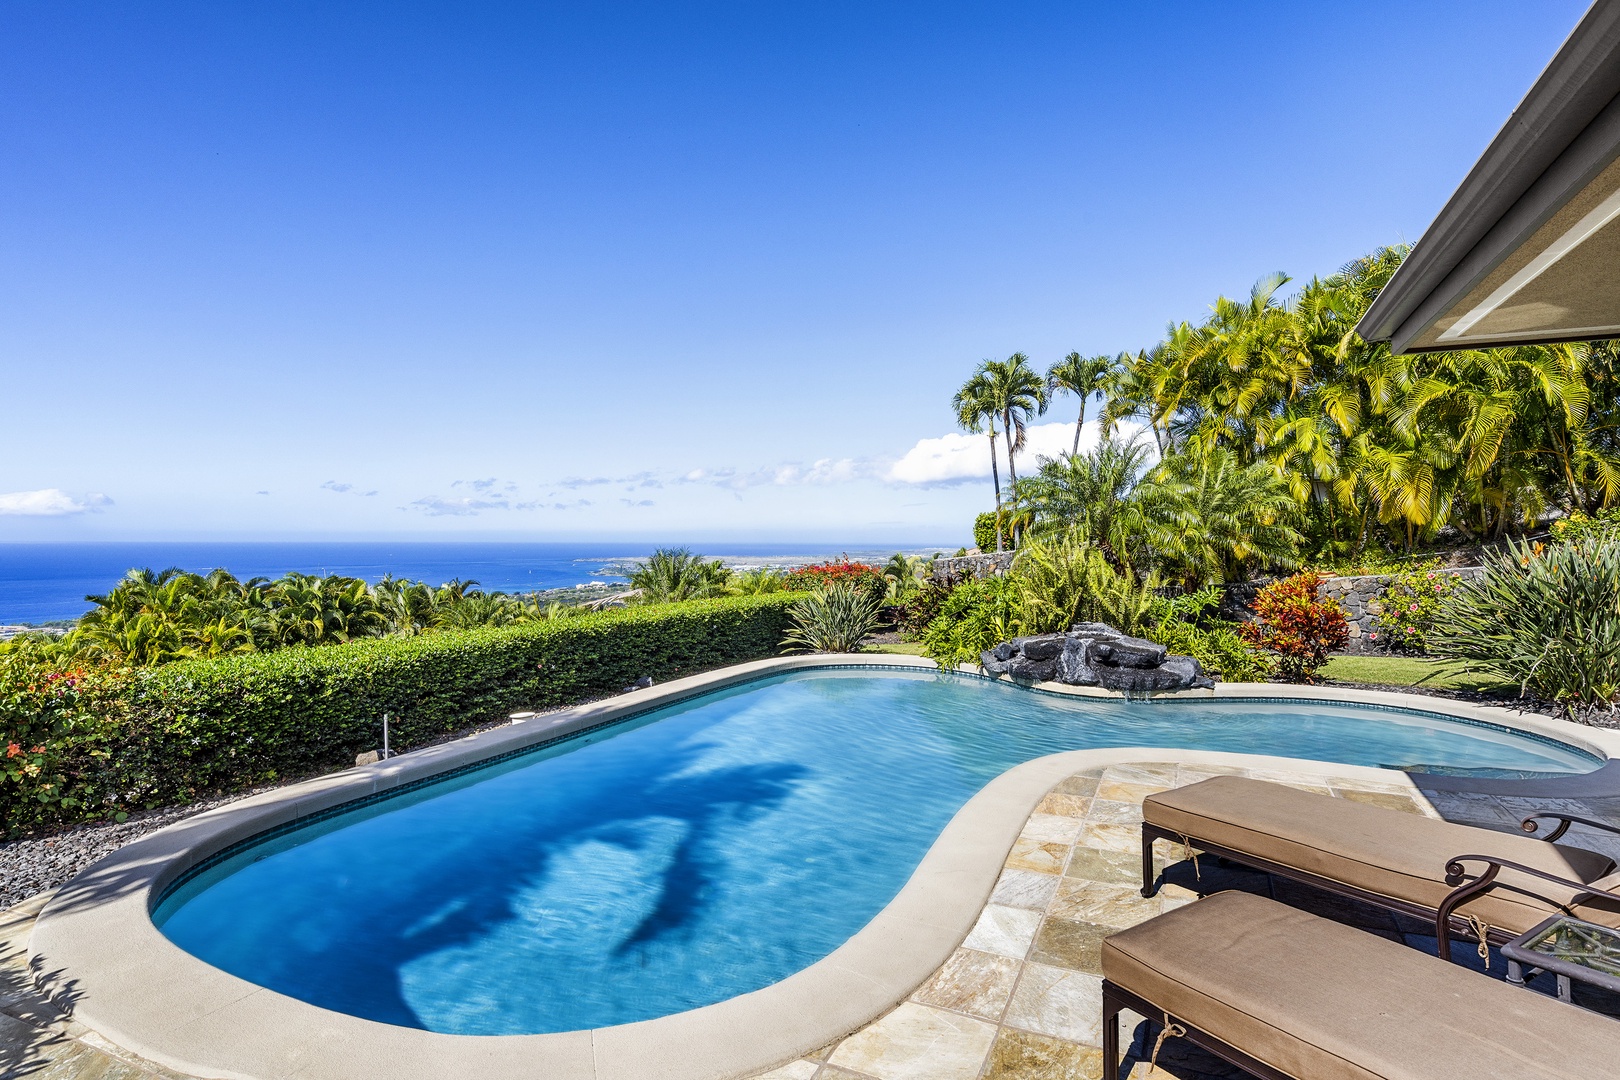 Kailua Kona Vacation Rentals, Hale Aikane - Relax in the pool while taking in the Kona Coast!